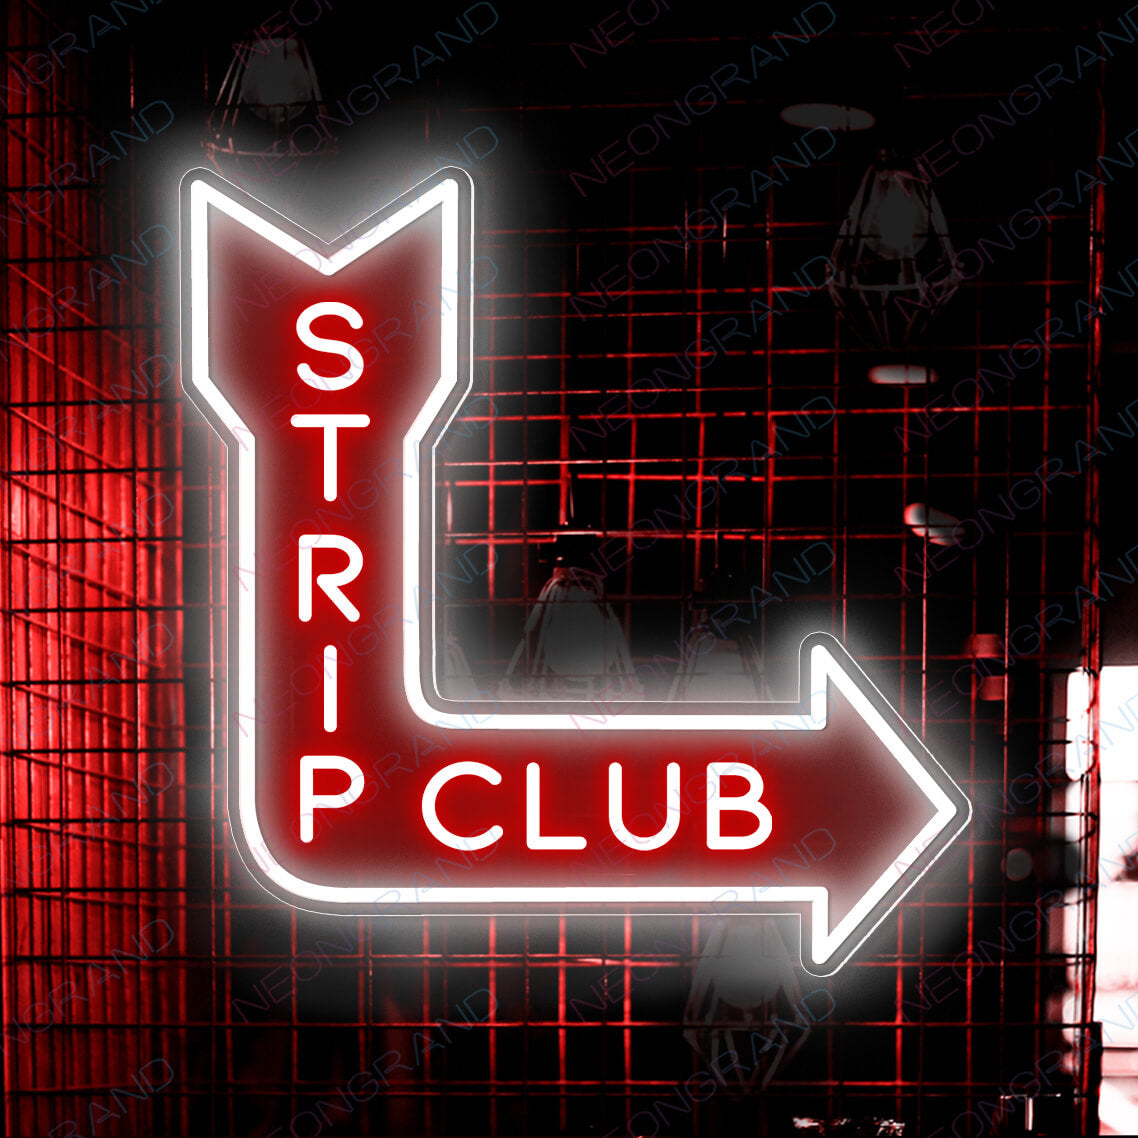 Strip Club Neon Sign Bar Led Light red